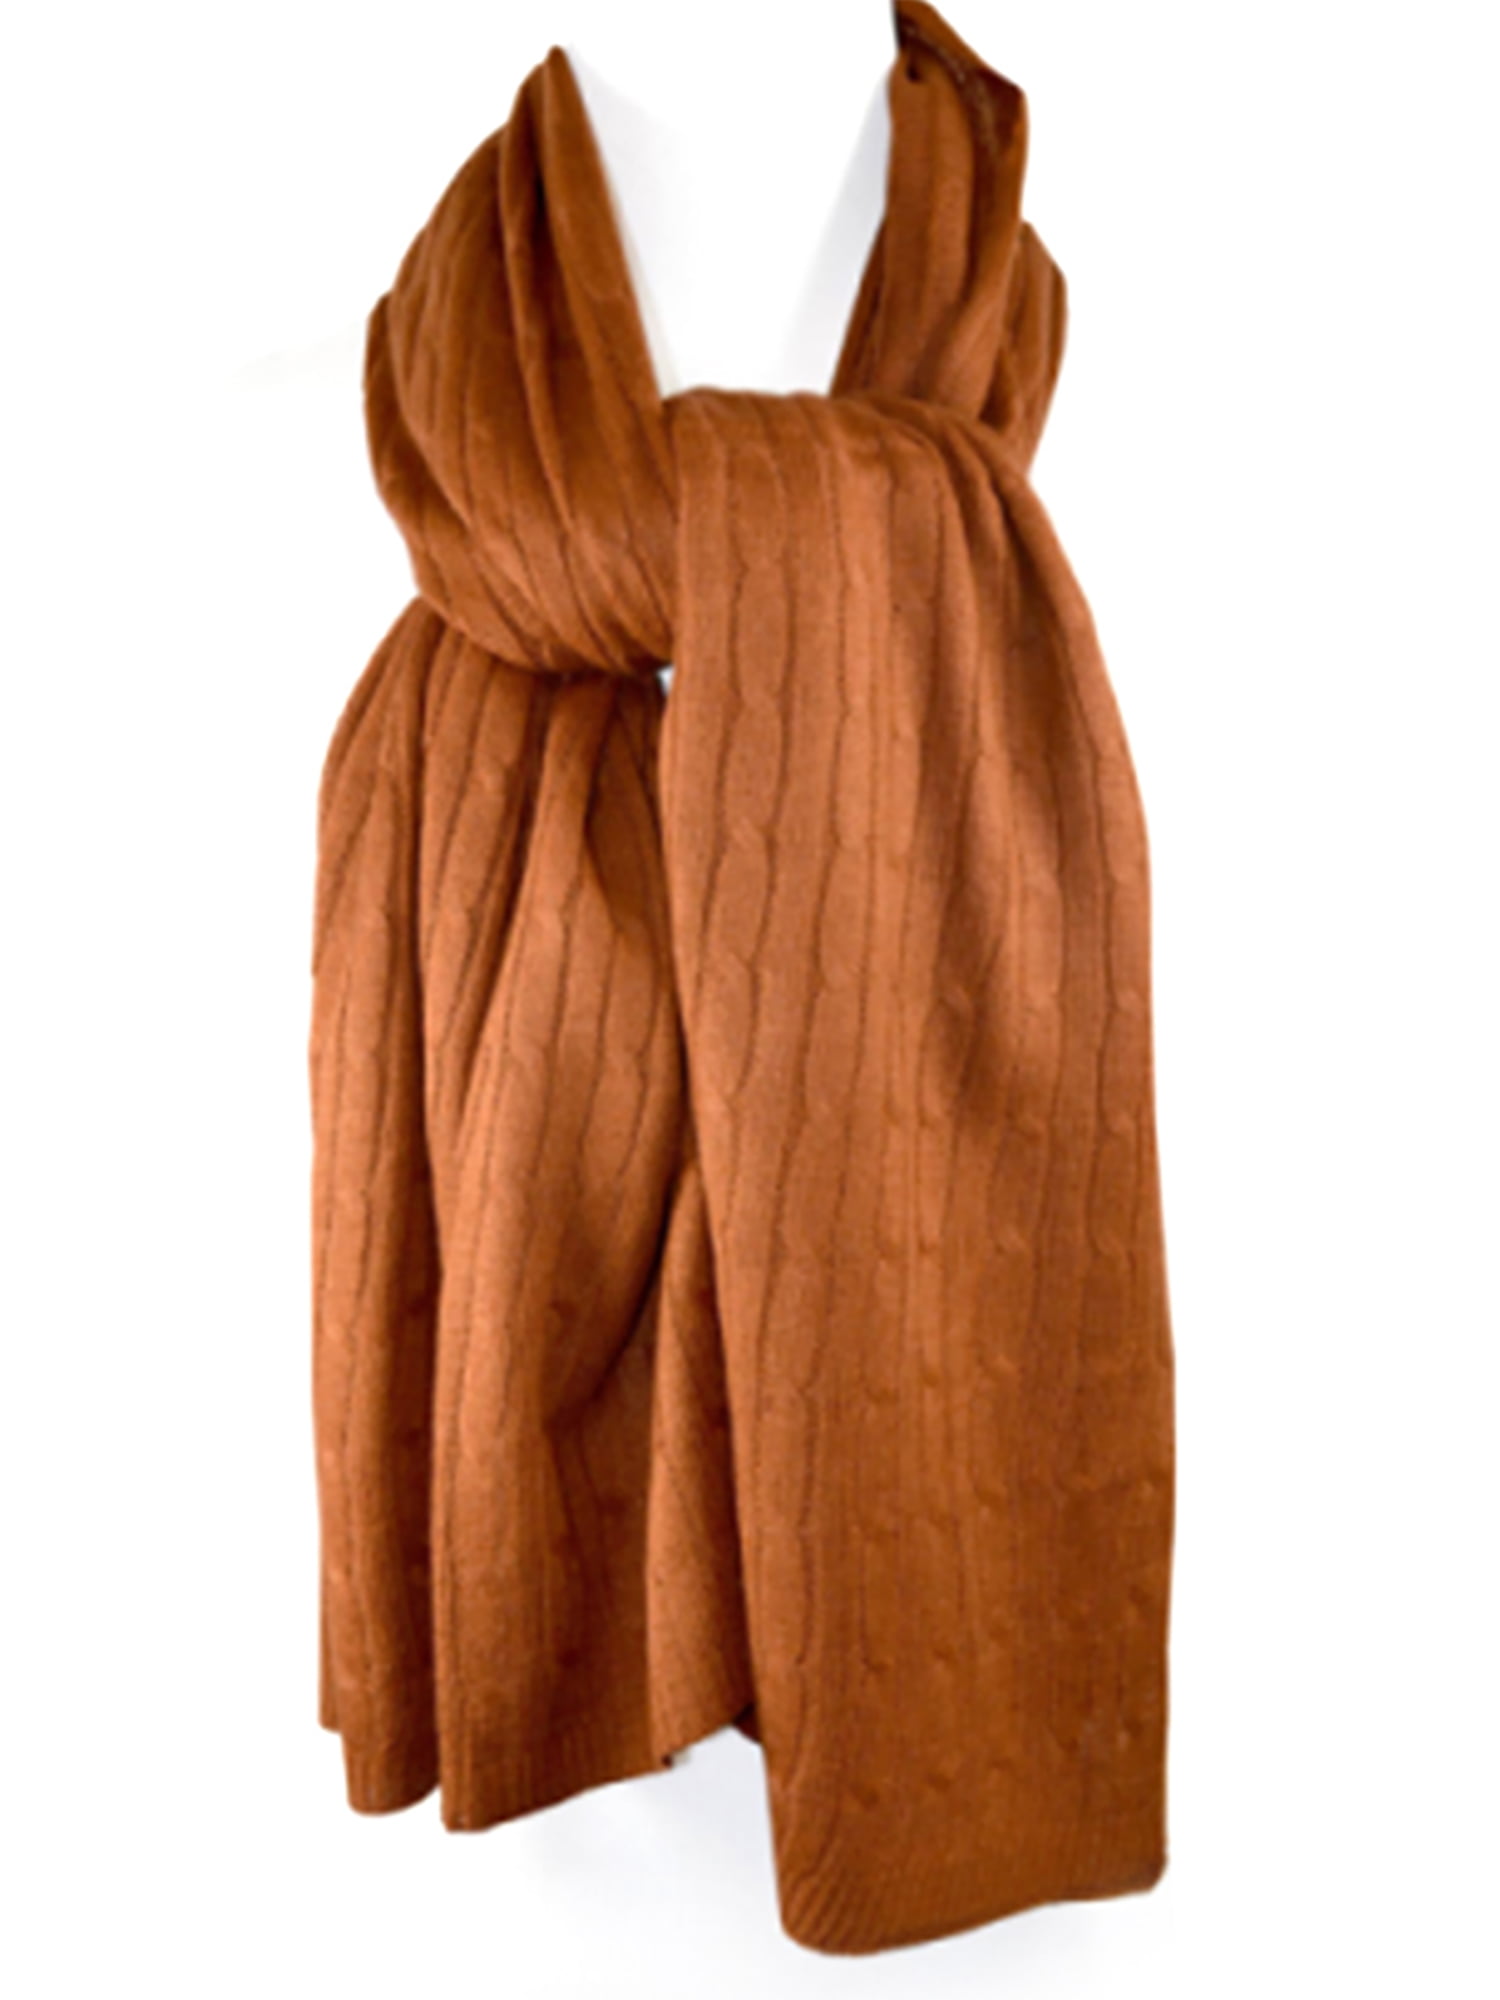 Handloomed Shawl Handcrafted Fur Tassels Collar 2527 Base Color: Green & Rust Shawl Embroidery Yak+Sheep Wool Blend Wrap